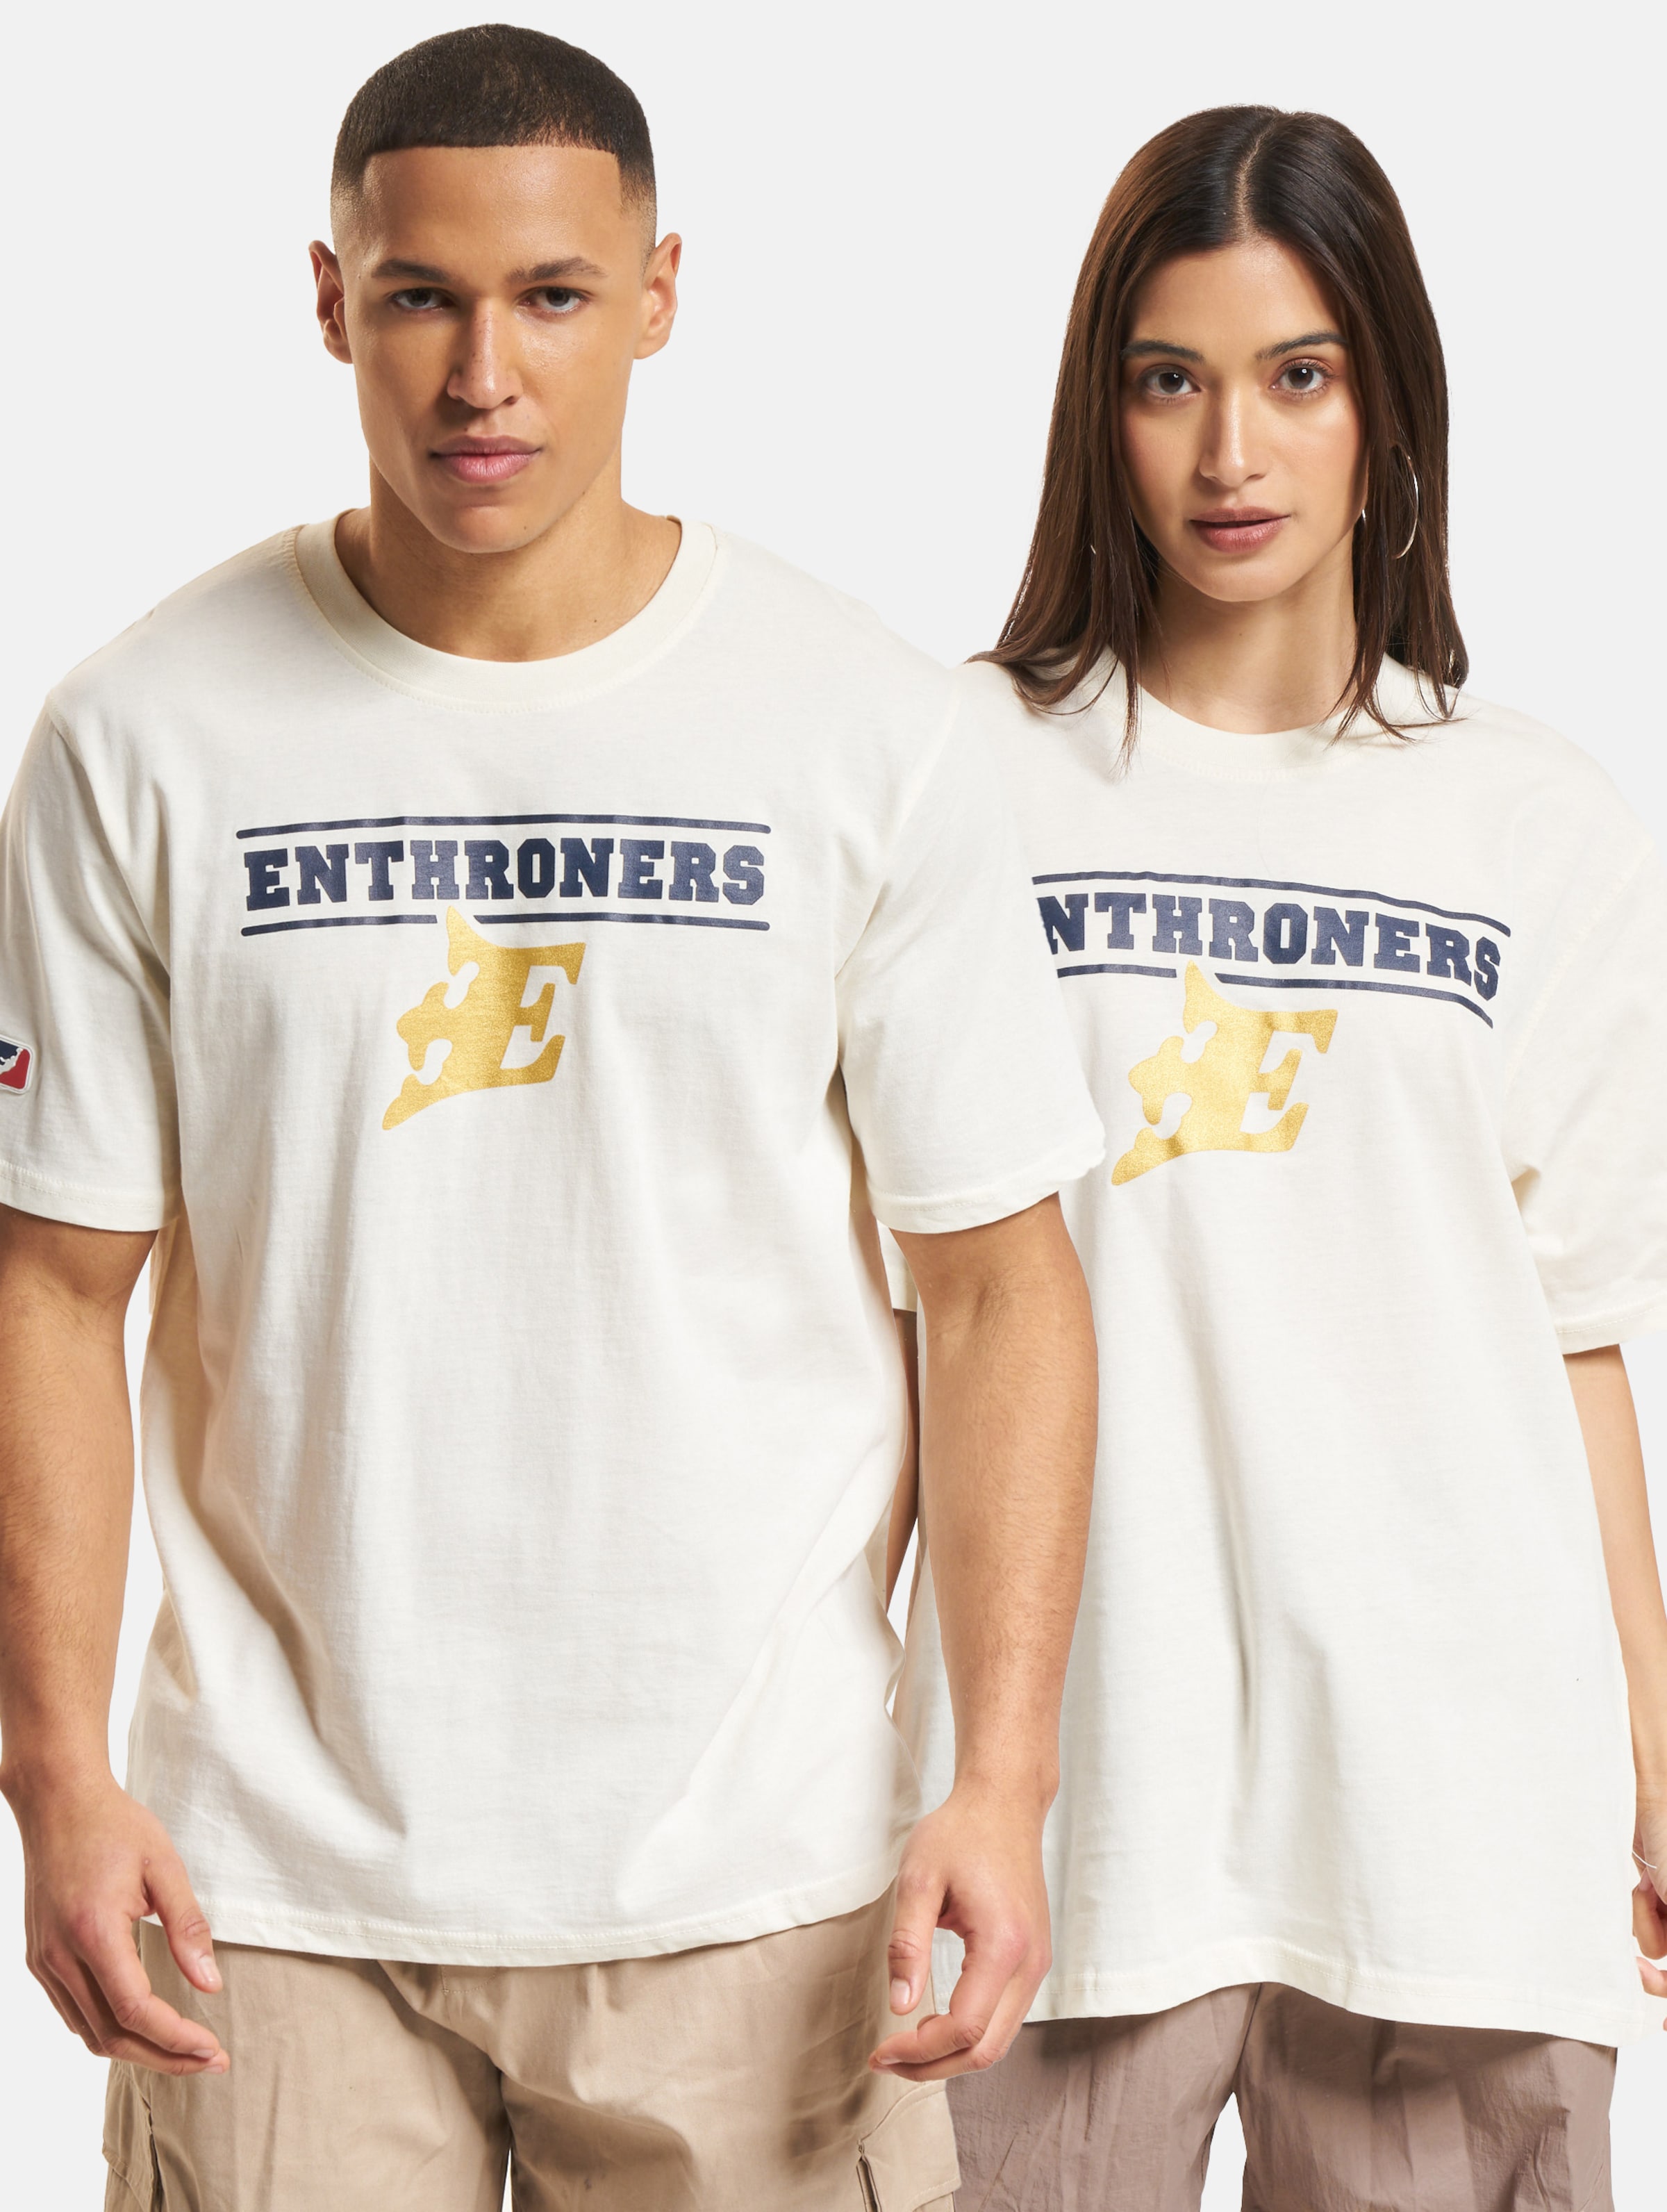 European League Of Football ELF Fehérvár Enthroners 2 T-Shirt Unisex op kleur beige, Maat S